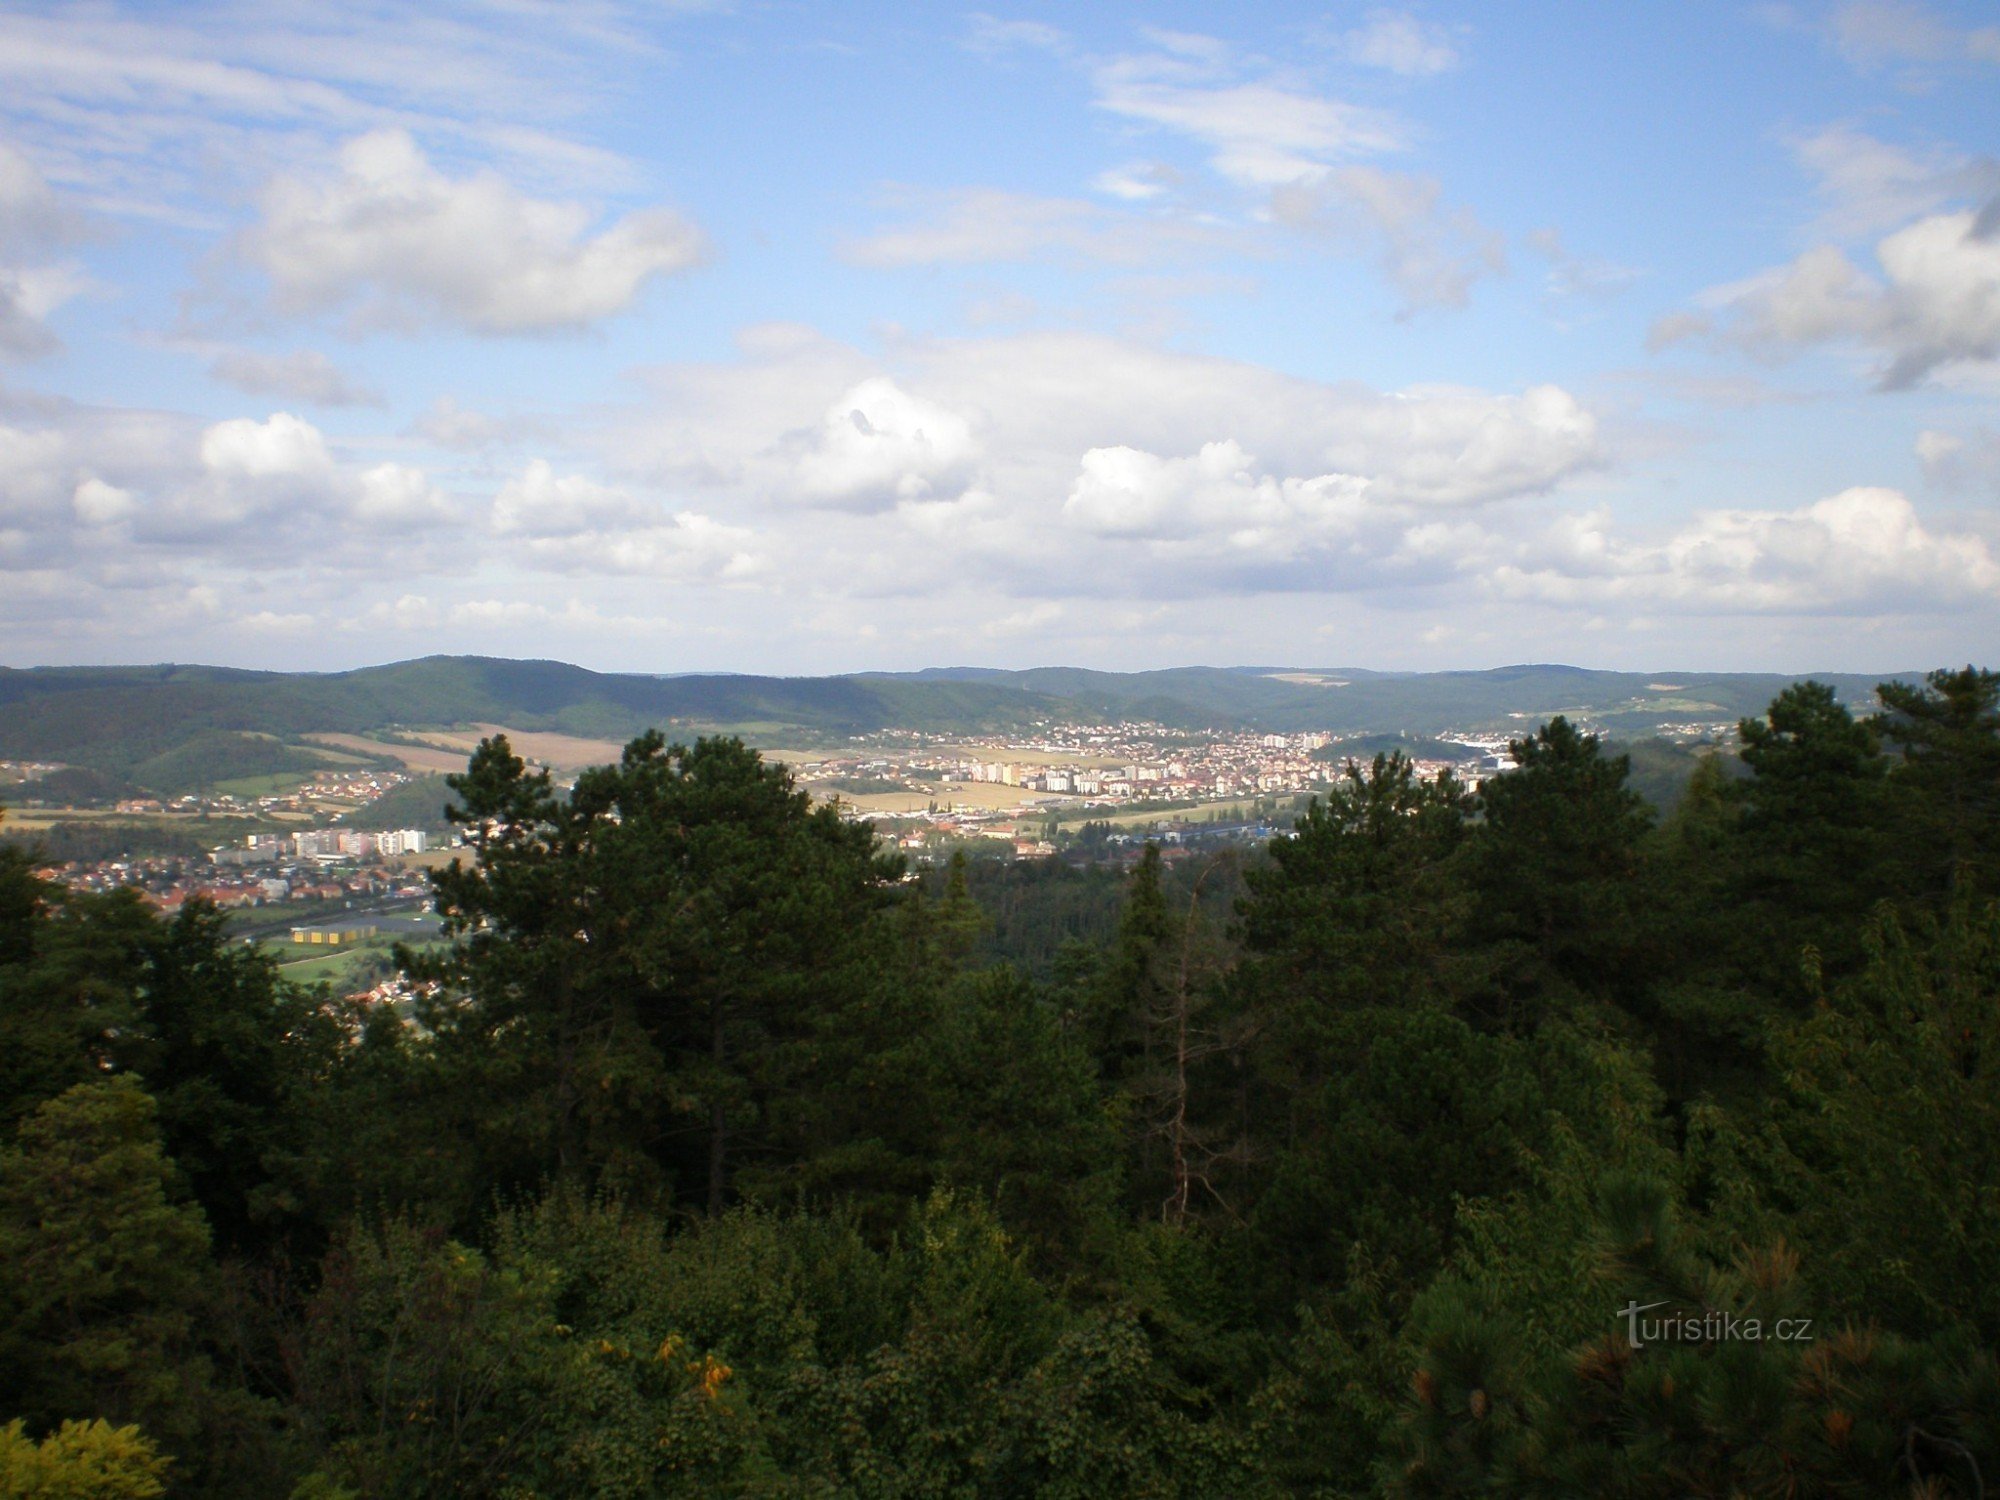 Blick vom Berg Koukola nach N (Richtung Beroun und Králův Dvůr)